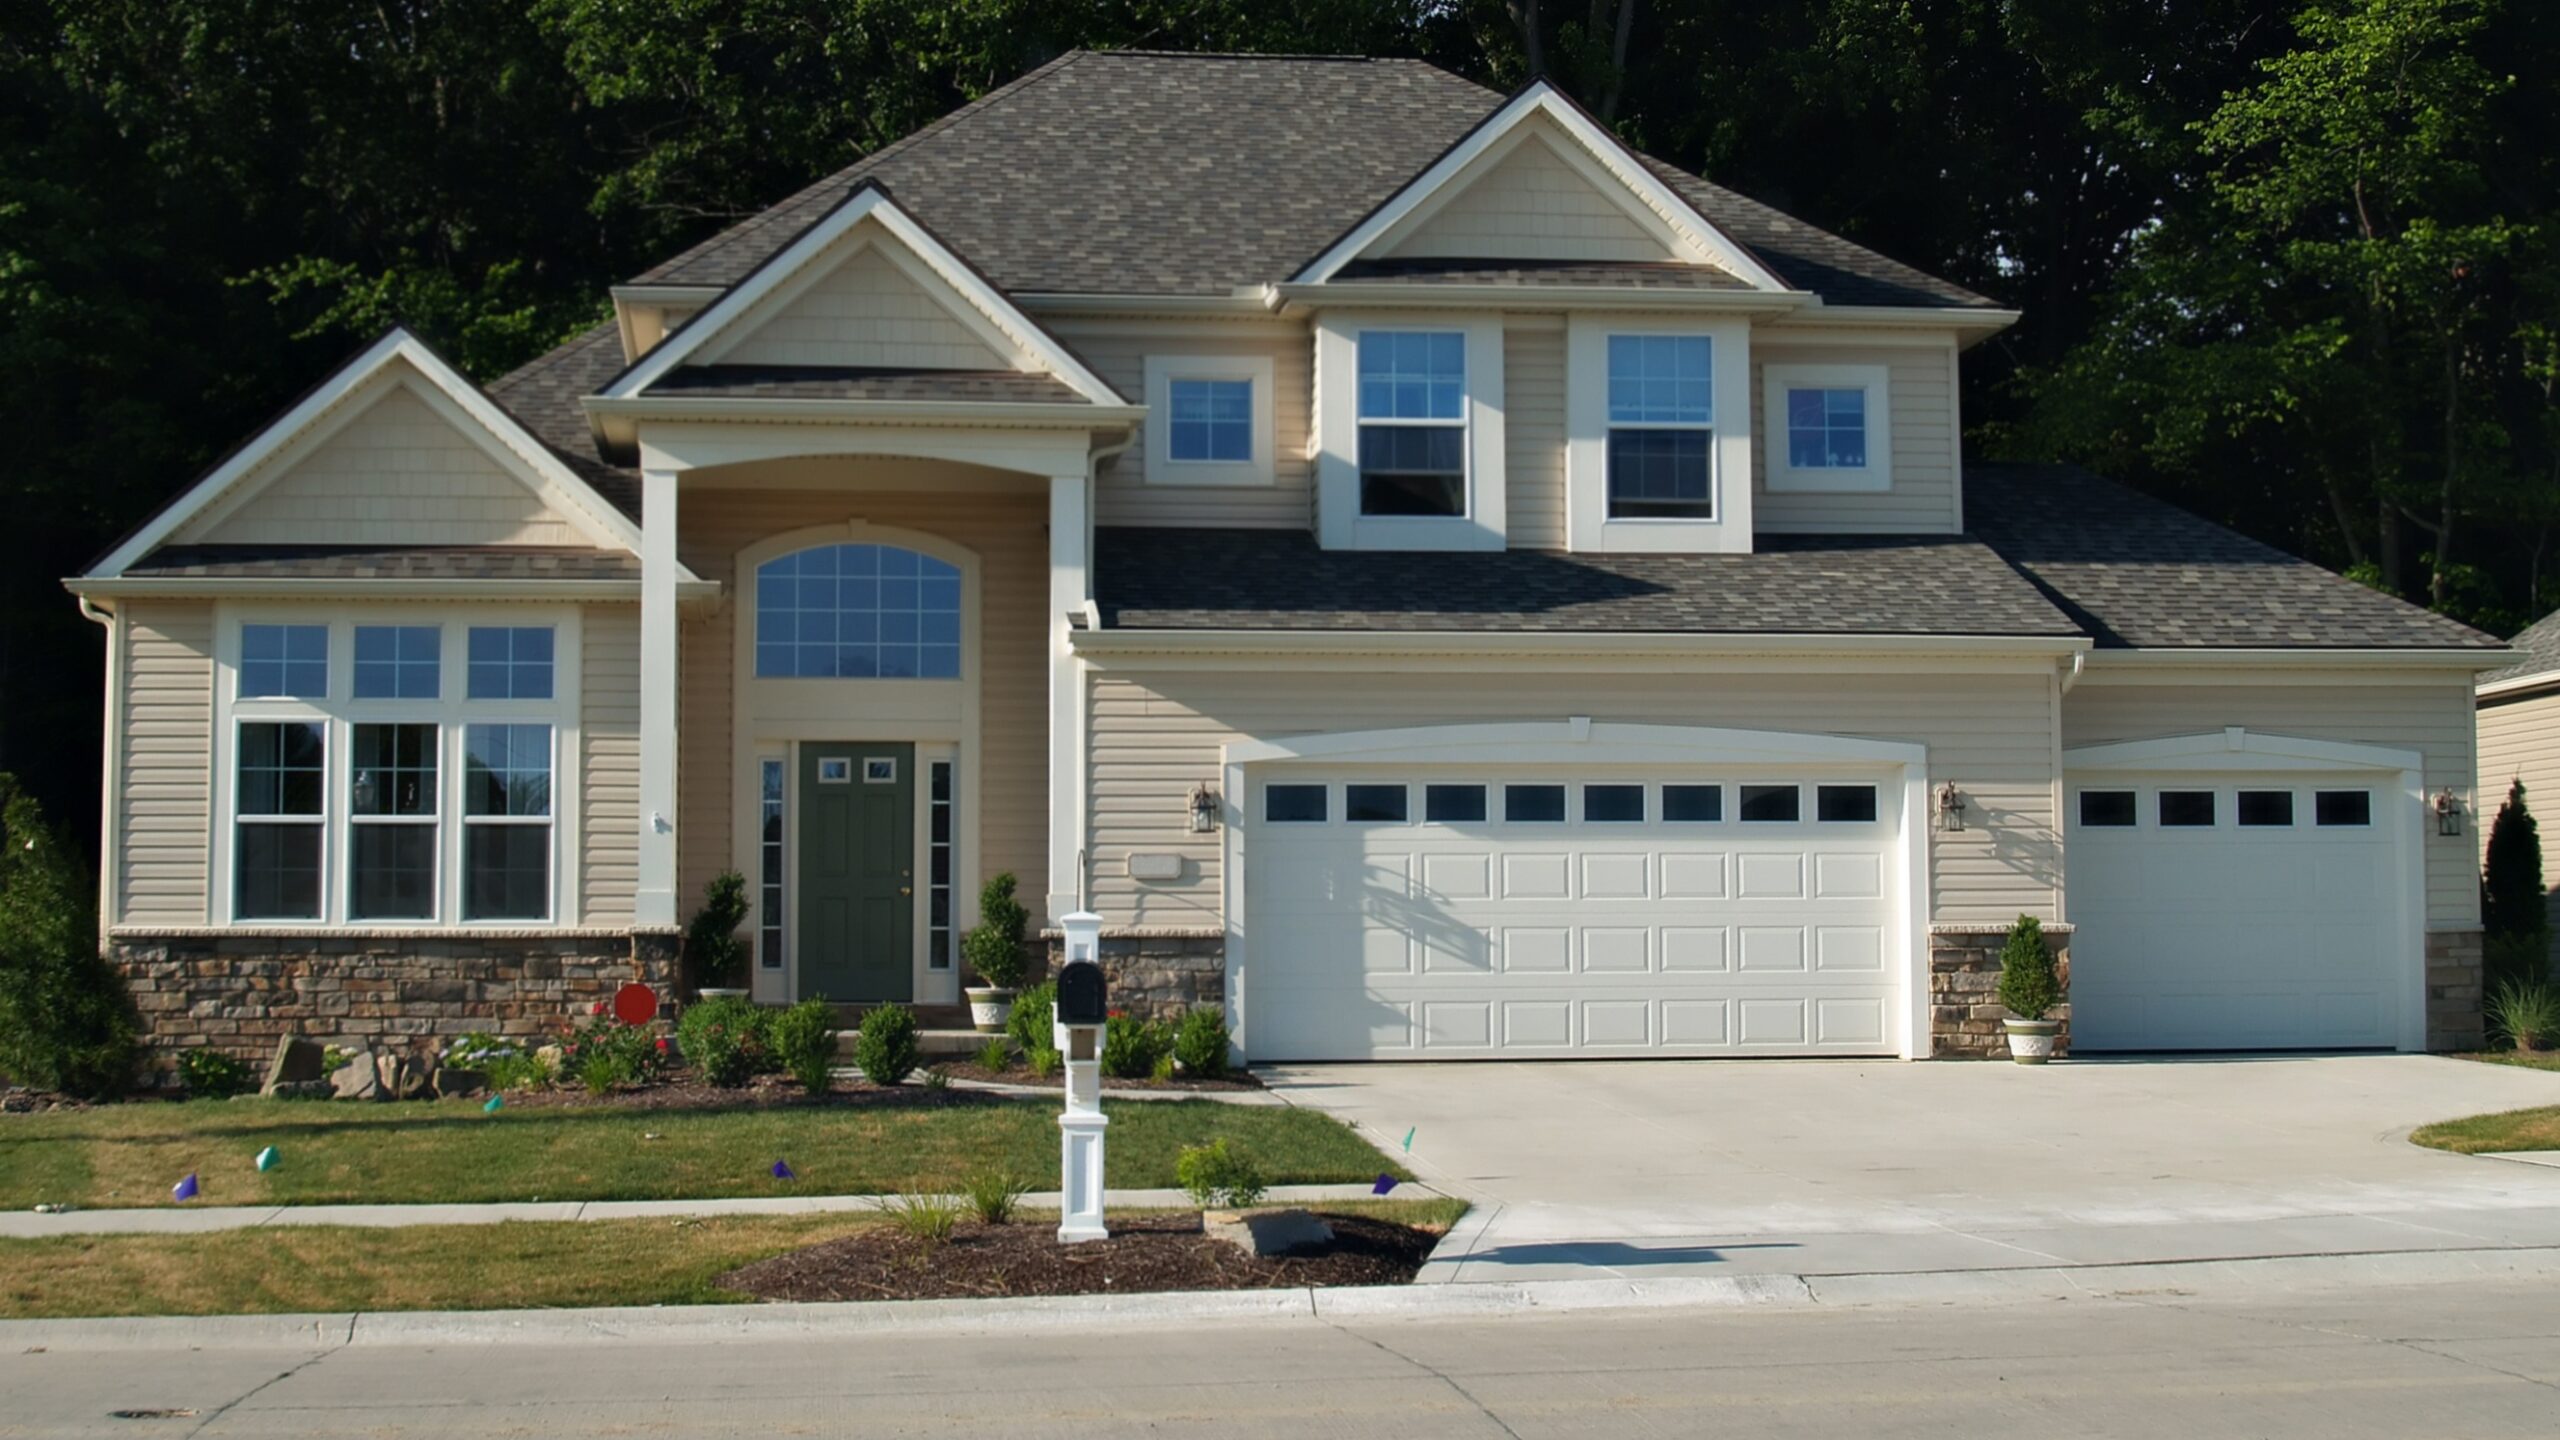 A home with beige siding, white trim, and a gray asphalt shingle roof